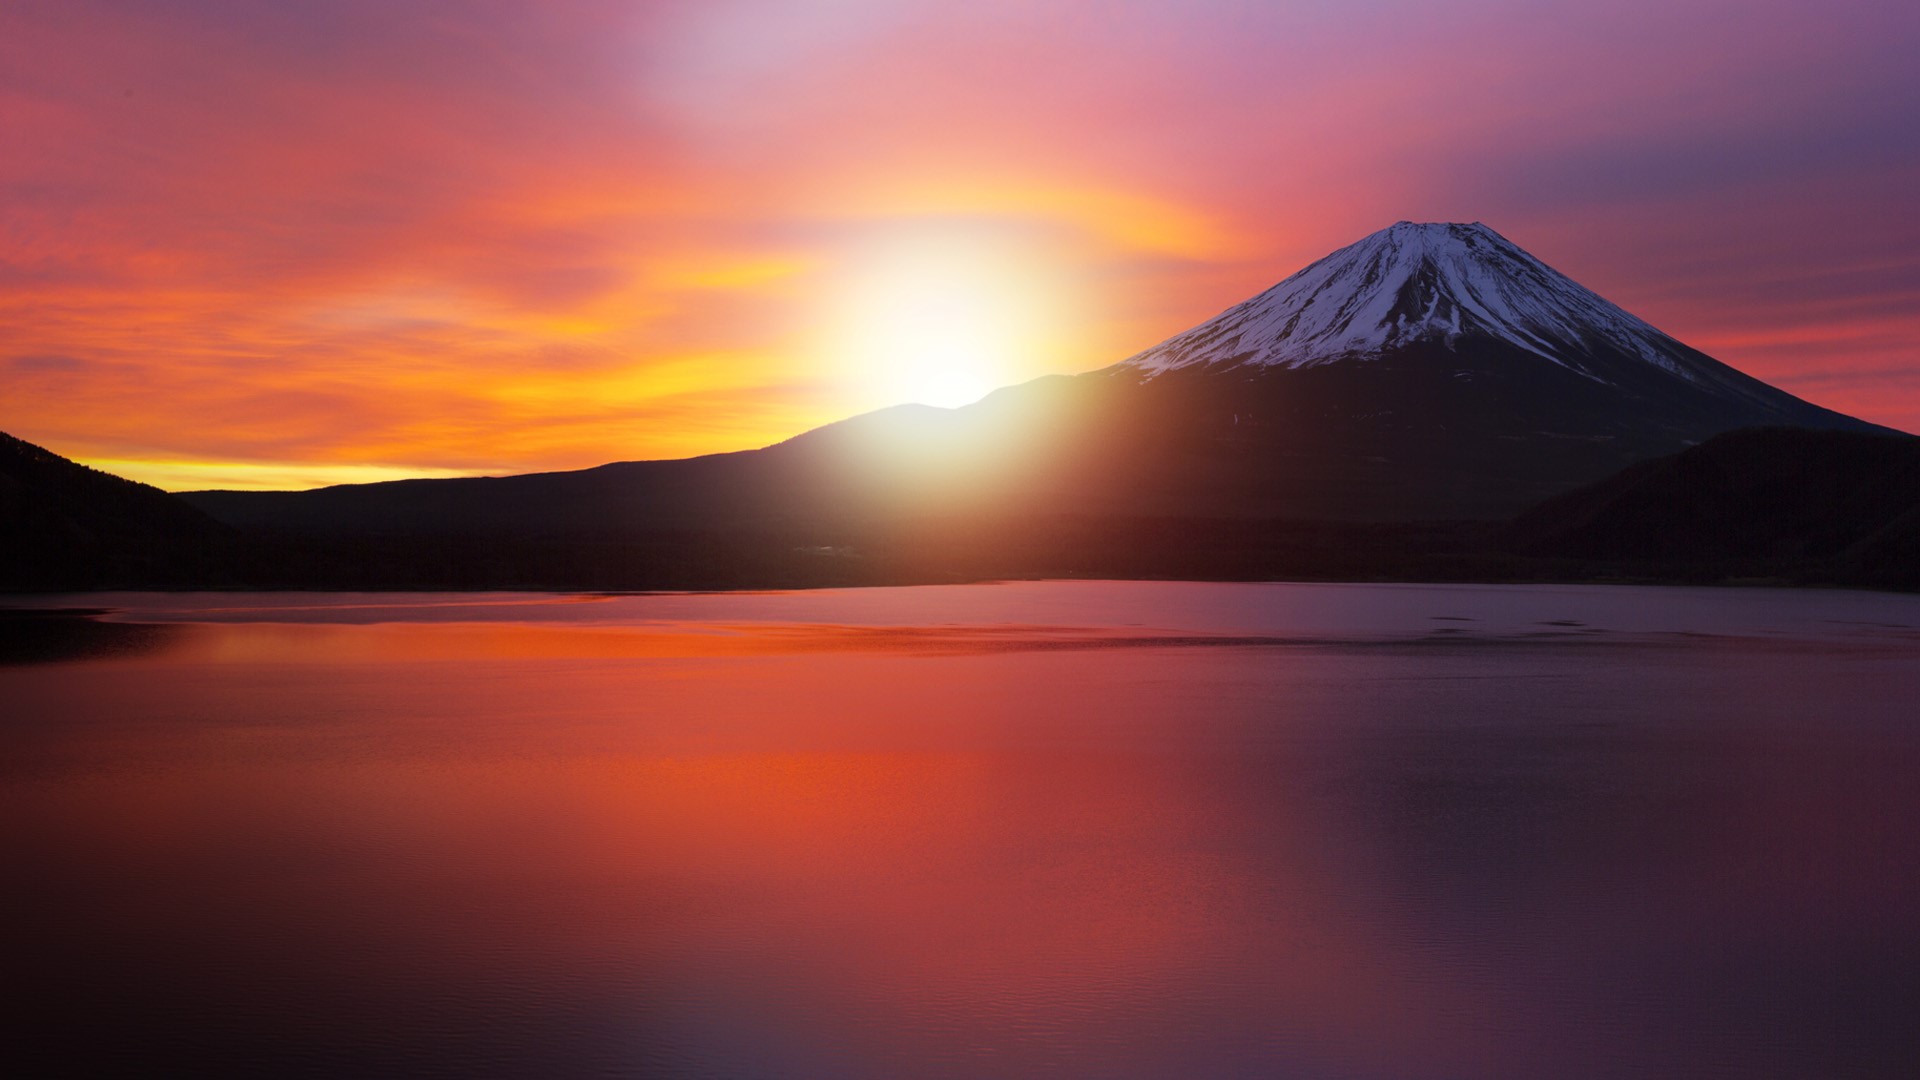 Mount Fuji at sunrise, Japan | Windows Spotlight Images